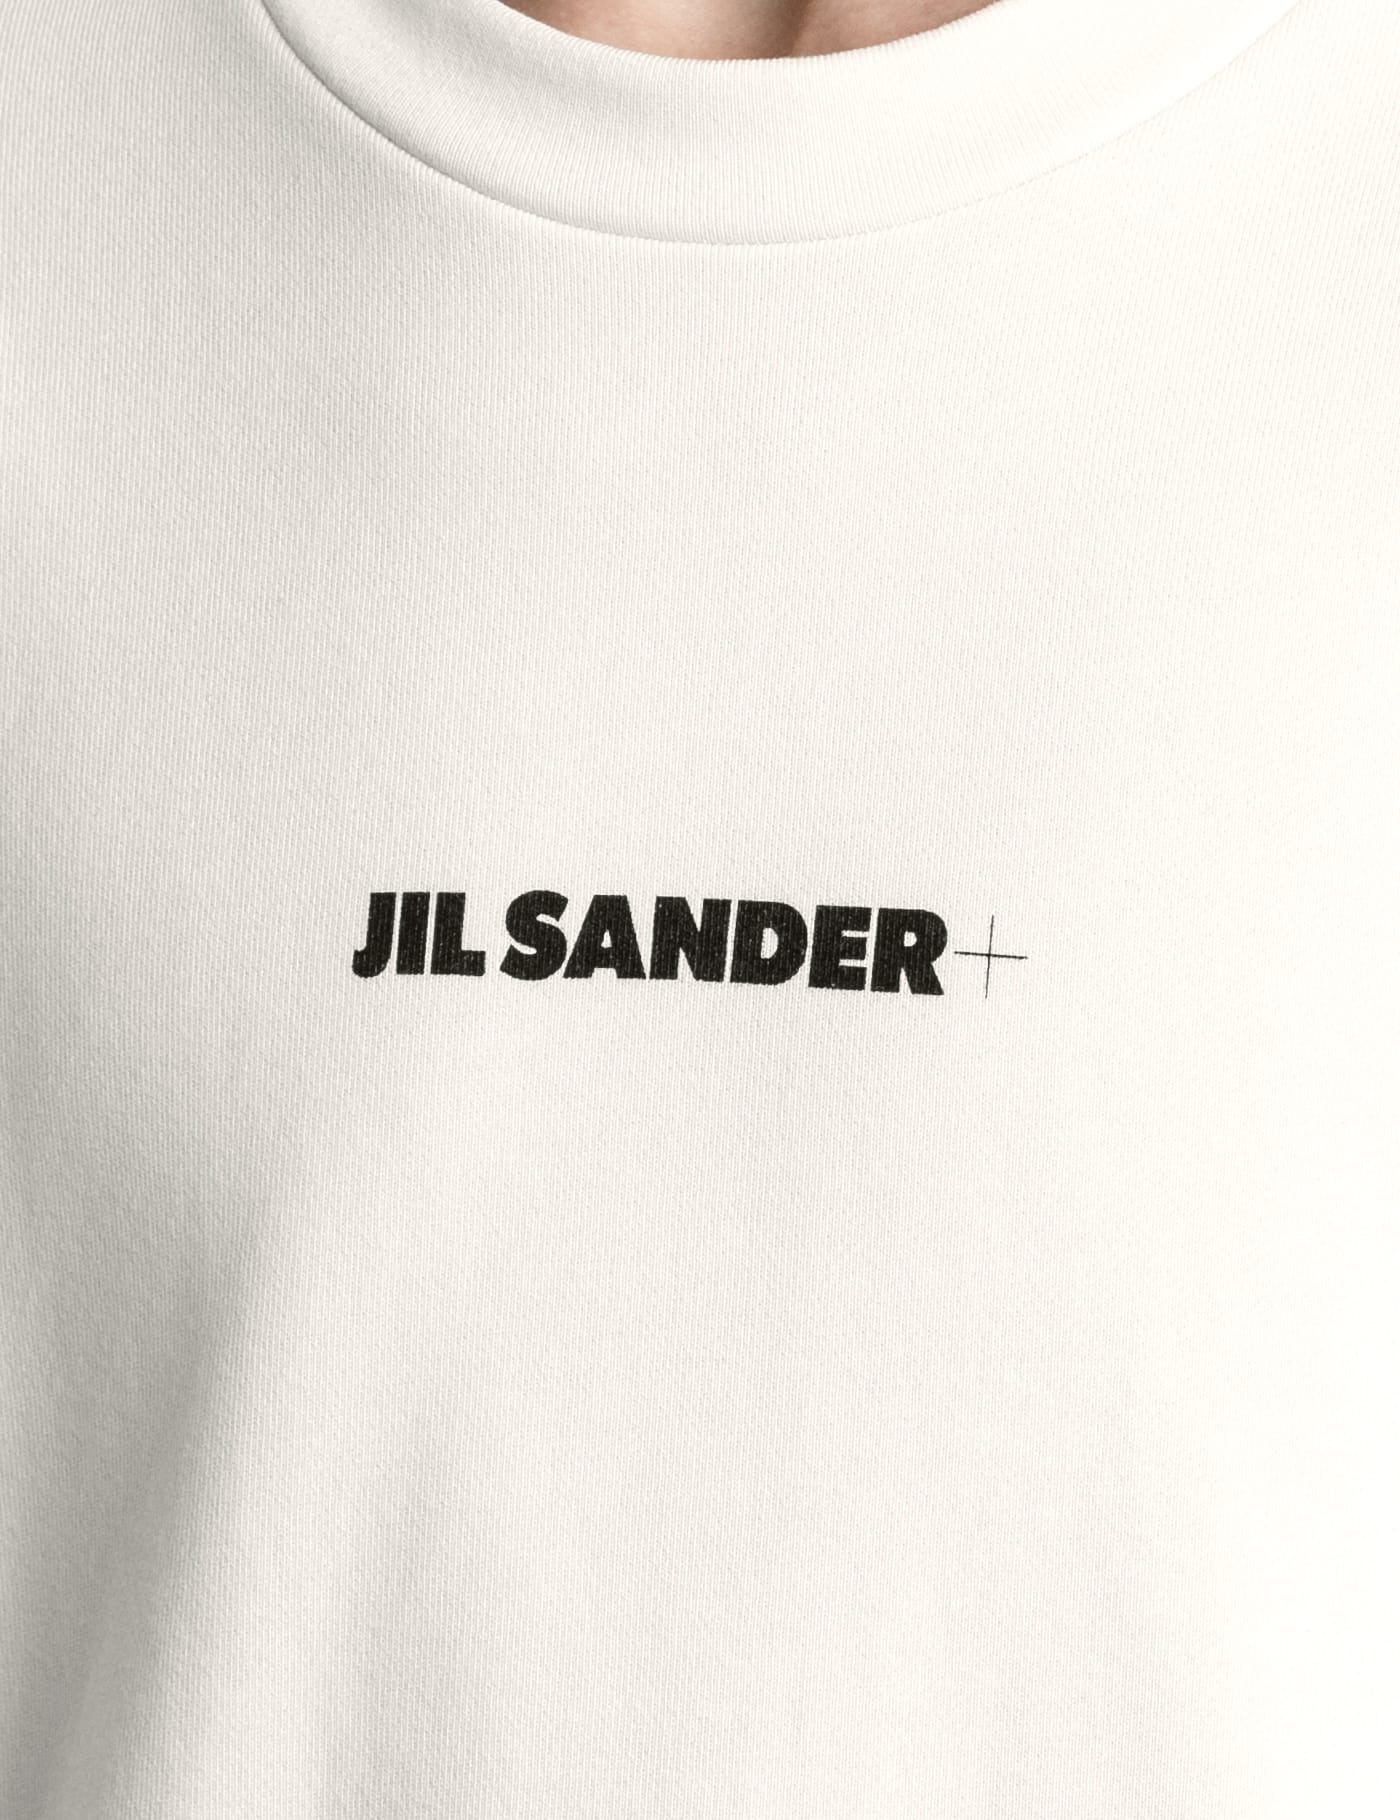 Jil Sander - ロゴ スウェットシャツ | HBX - ハイプビースト(Hypebeast)が厳選したグローバルファッション&ライフスタイル